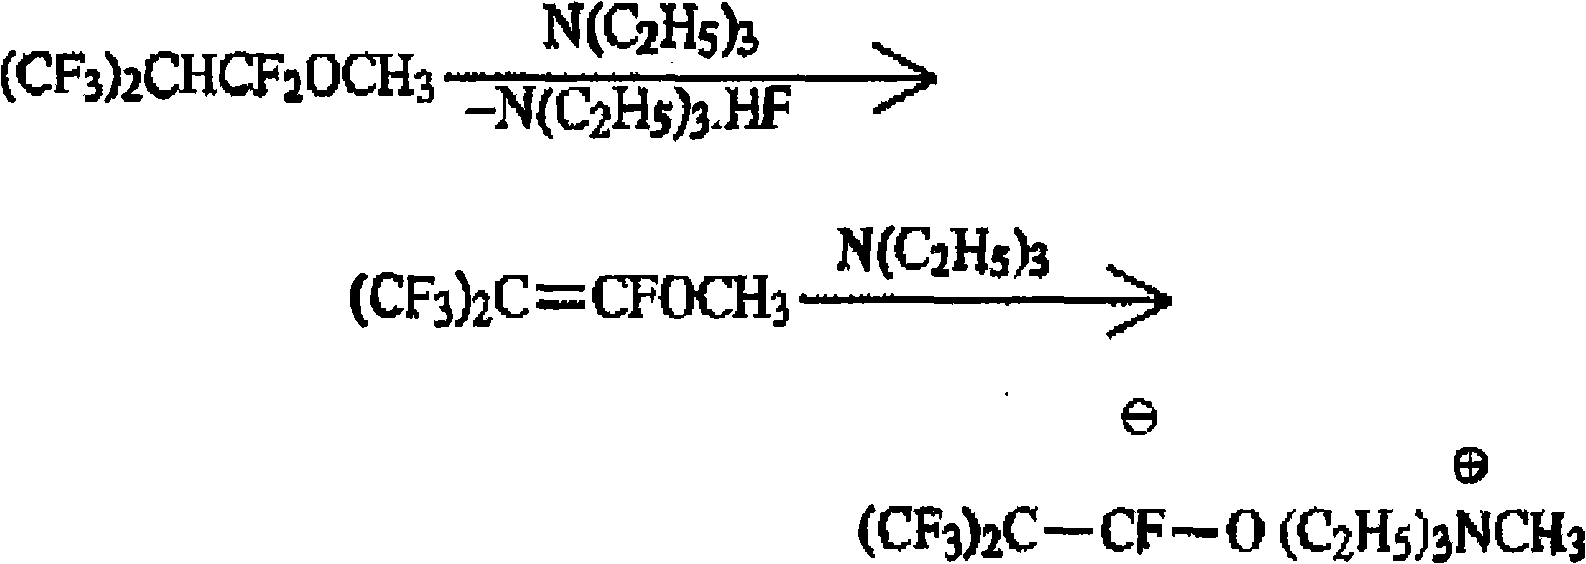 Method for preparing hexafluoroacetone